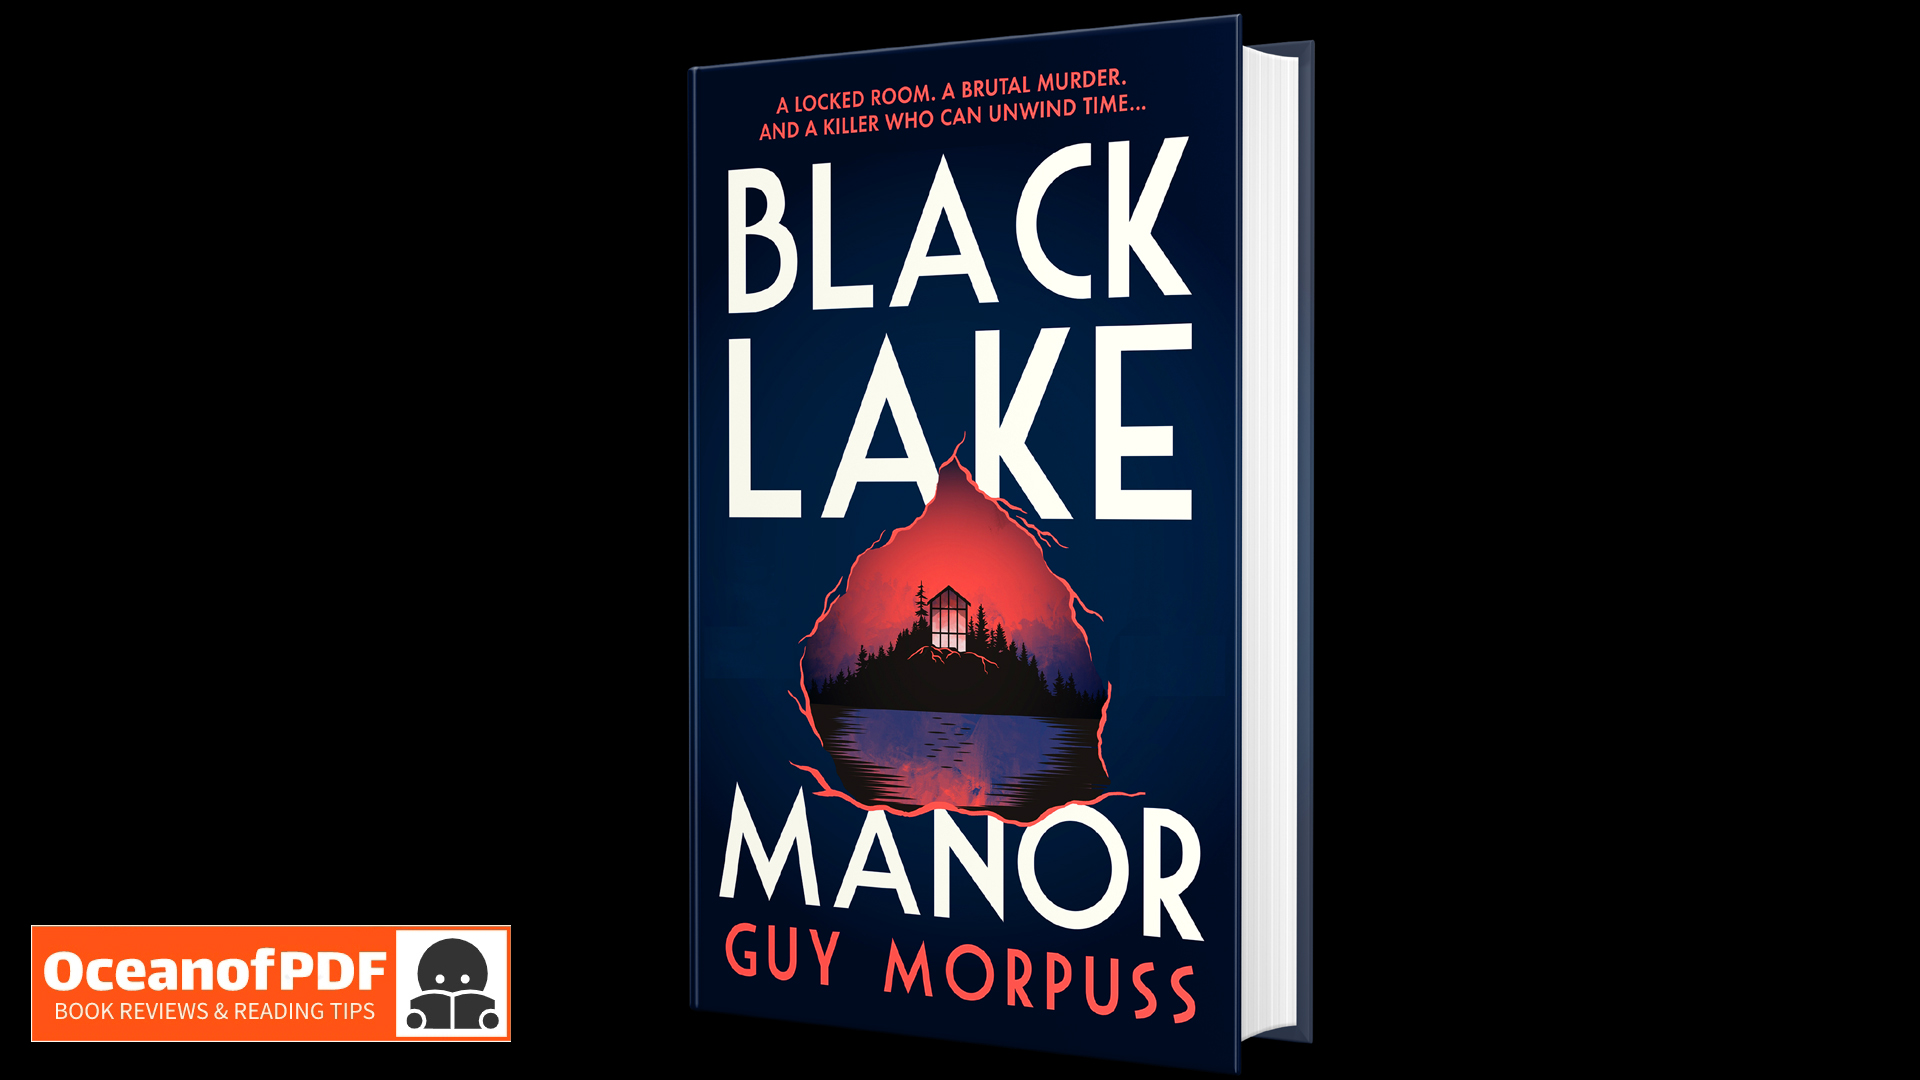 Black Lake Manor by Guy Morpuss